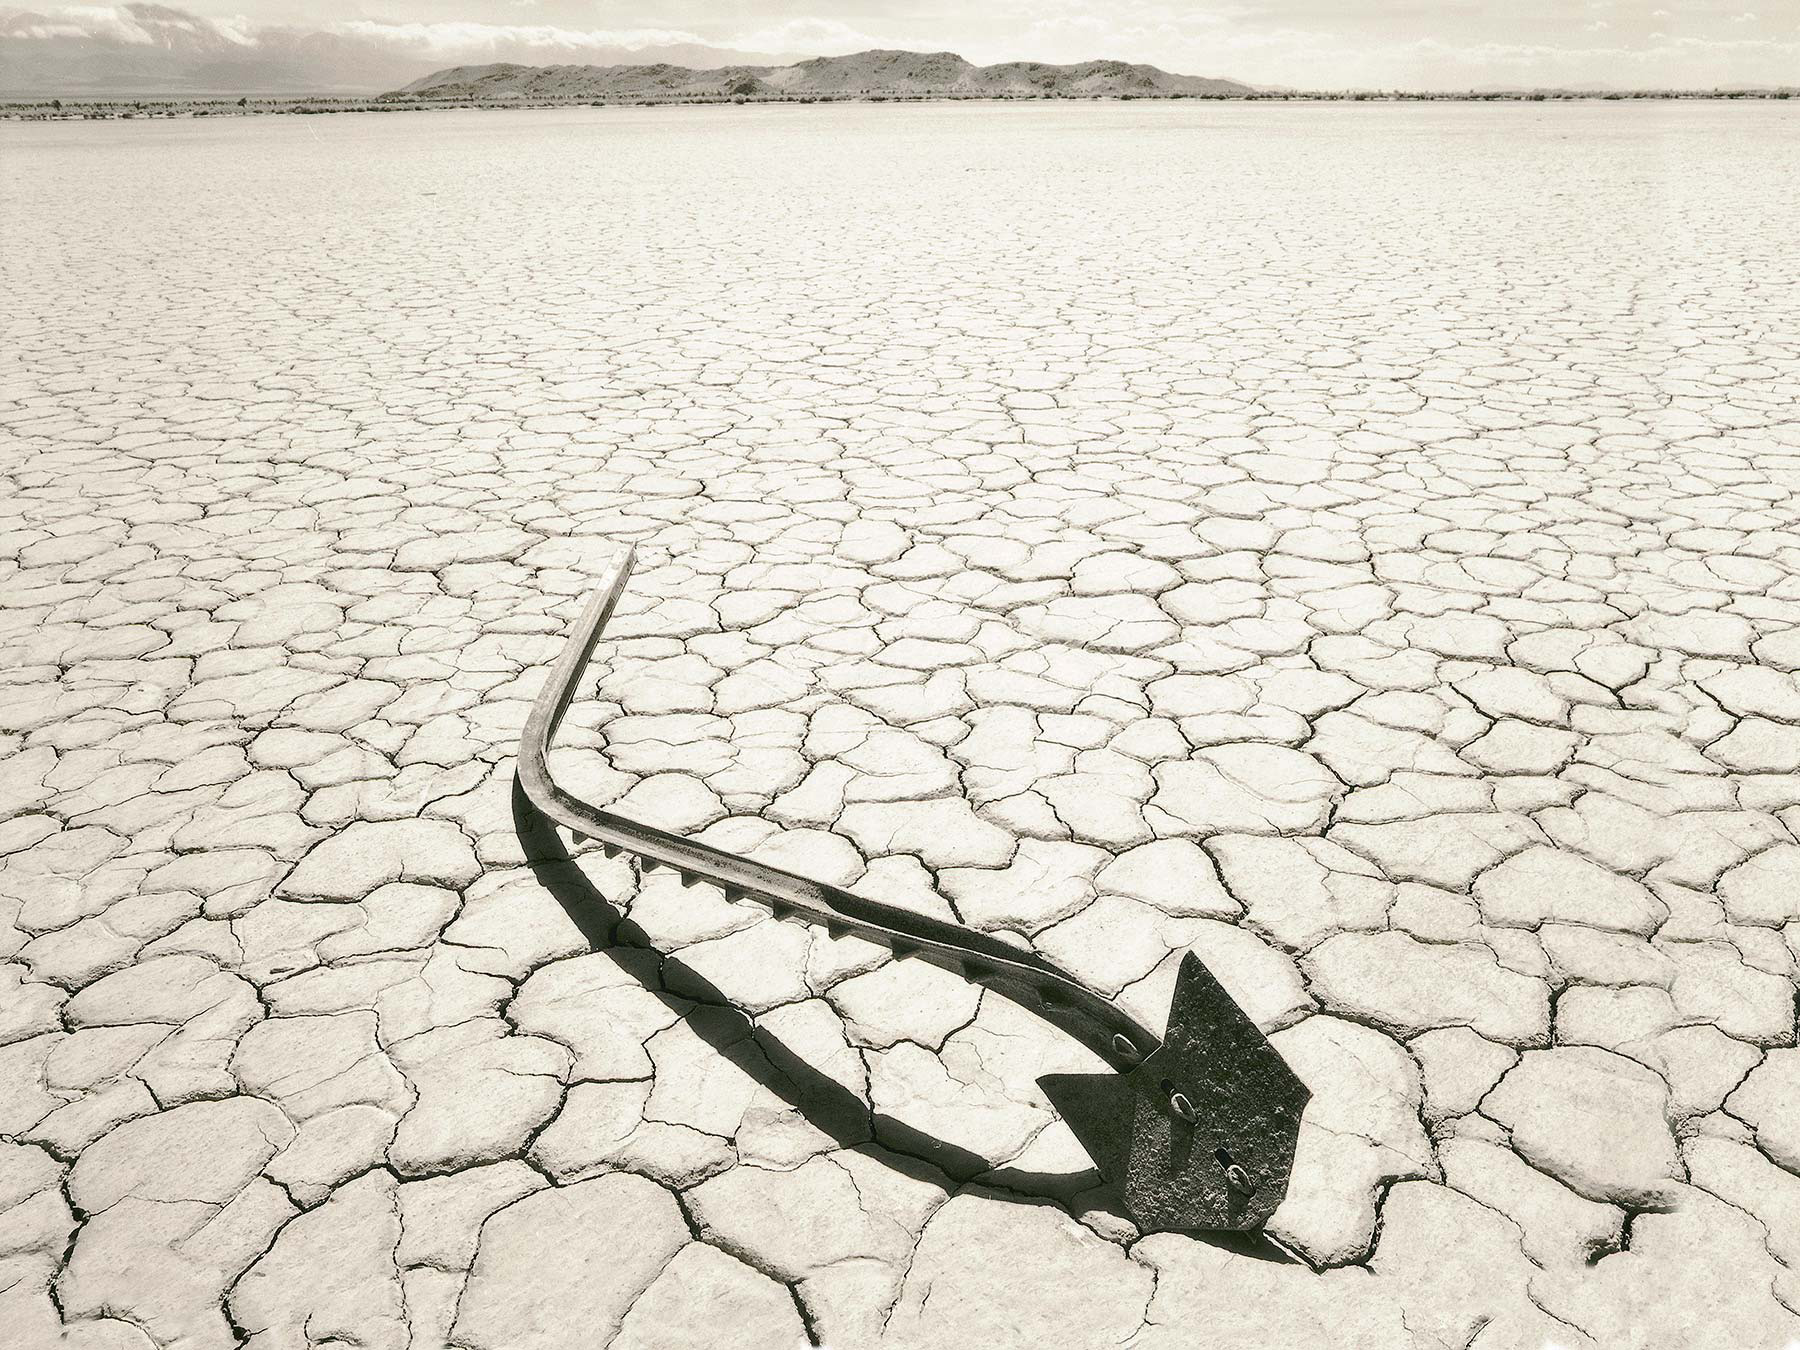 El Mirage Dry Lake - Black & White